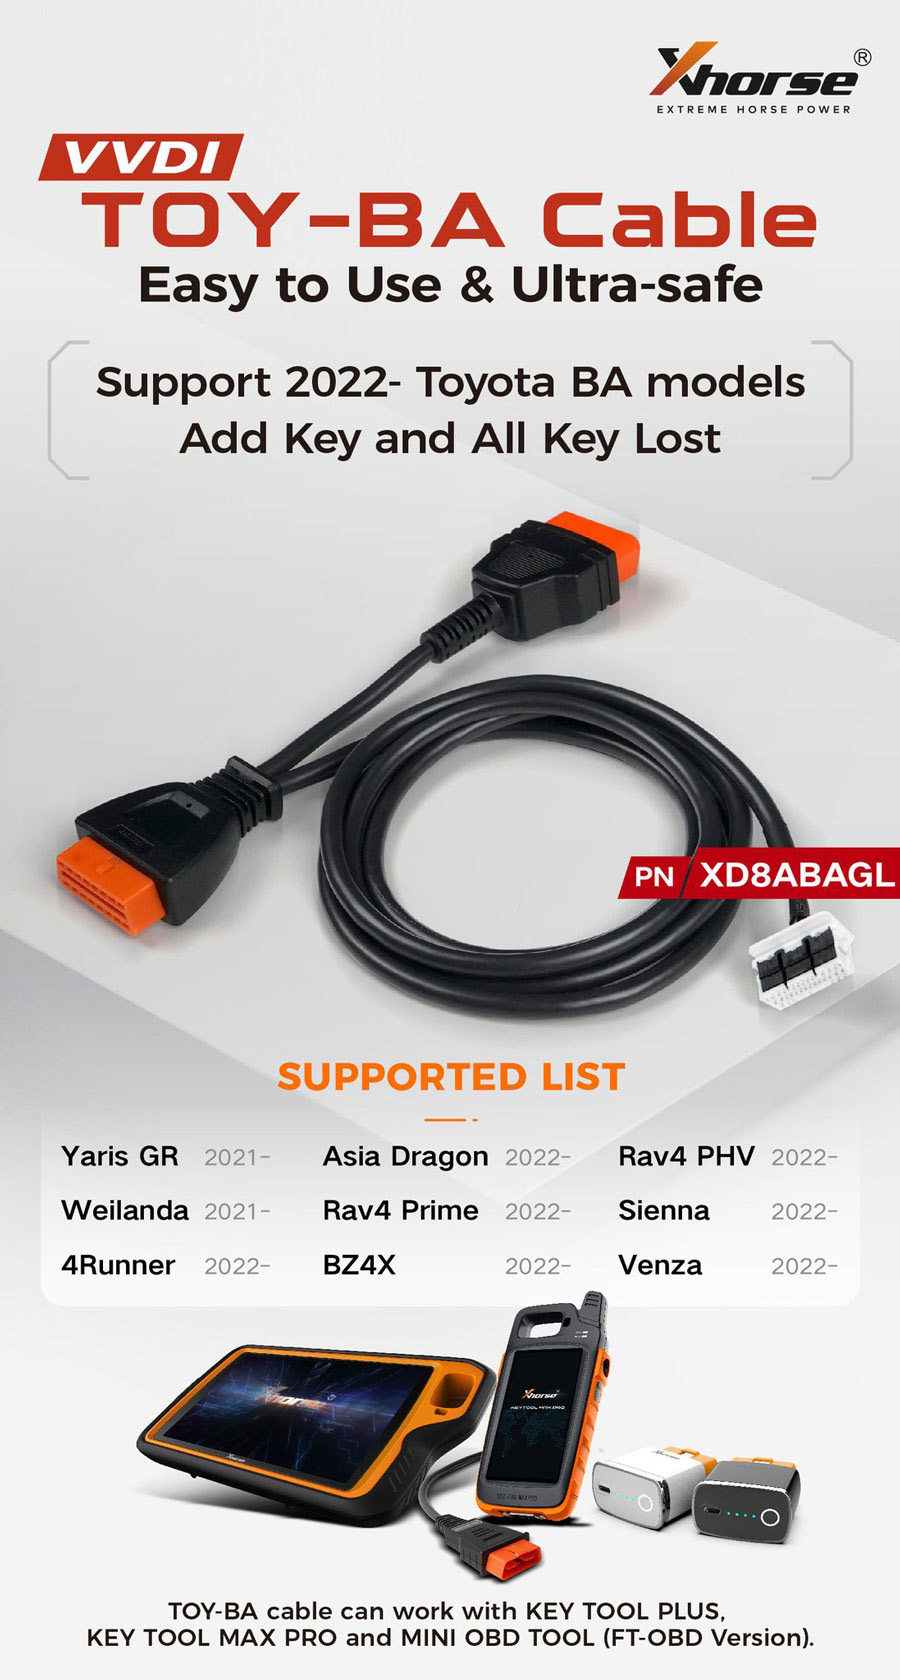 XHORSE XD8ABAGL Toyota BA All Keys Lost Adapter